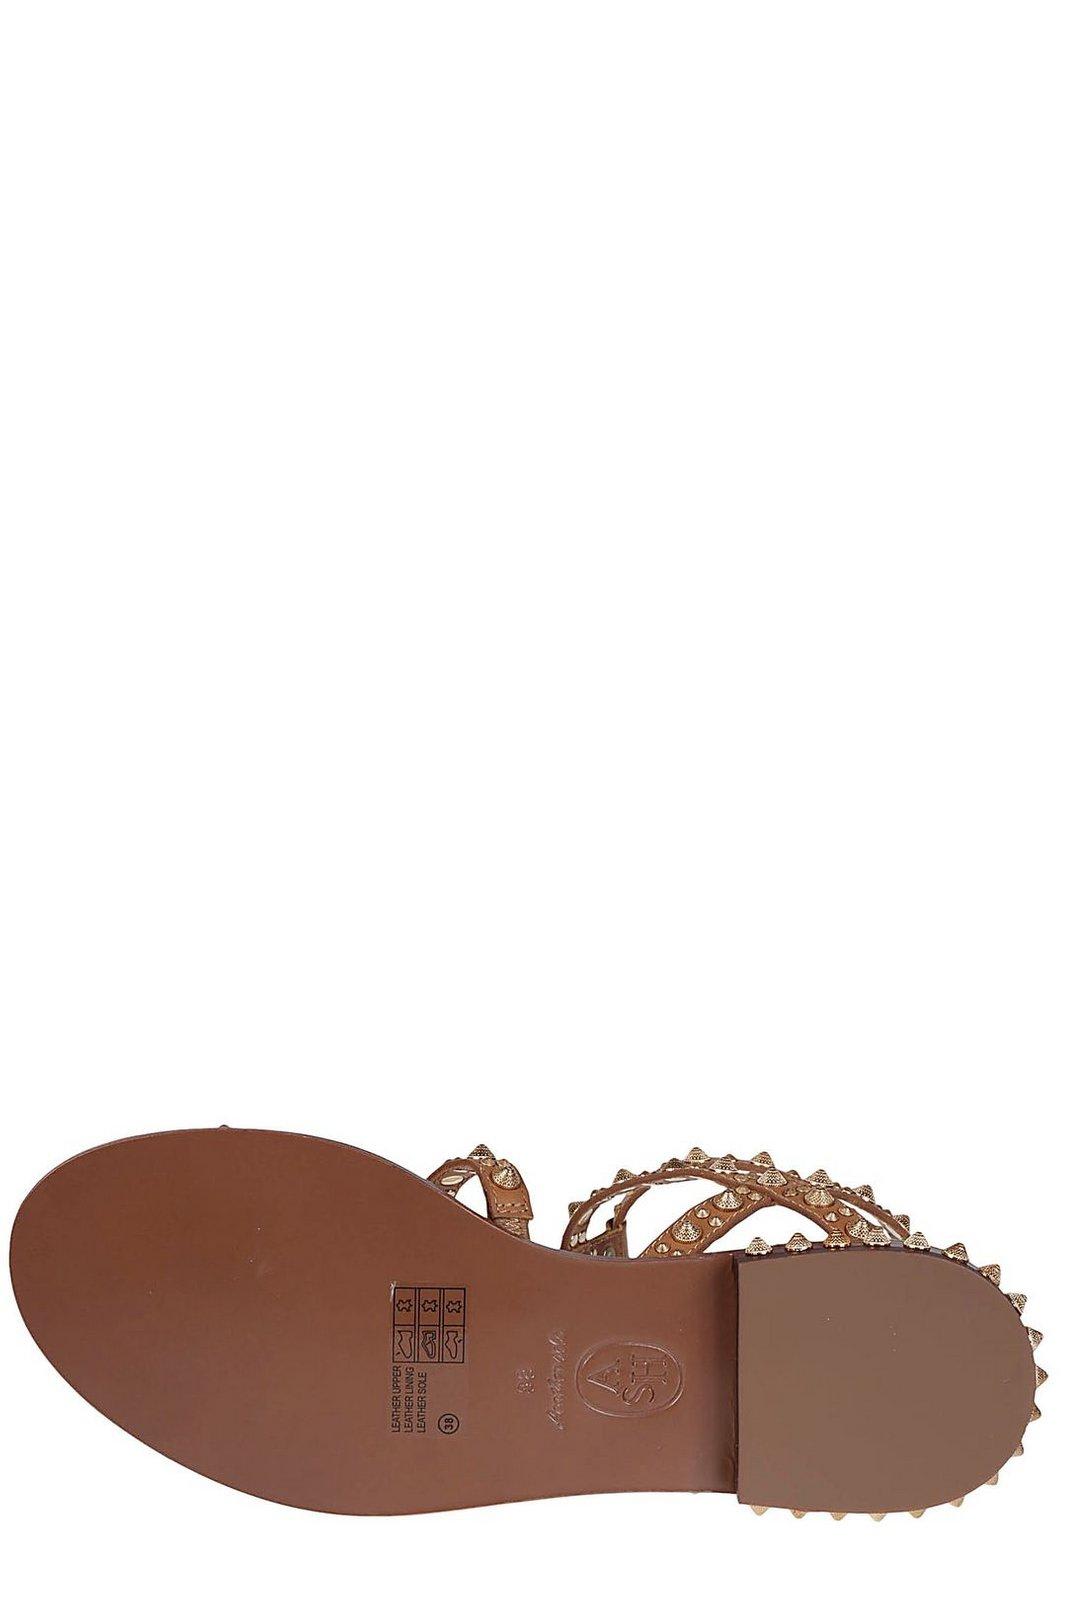 Shop Ash Embellished Open Toe Sandals In Leather Brown